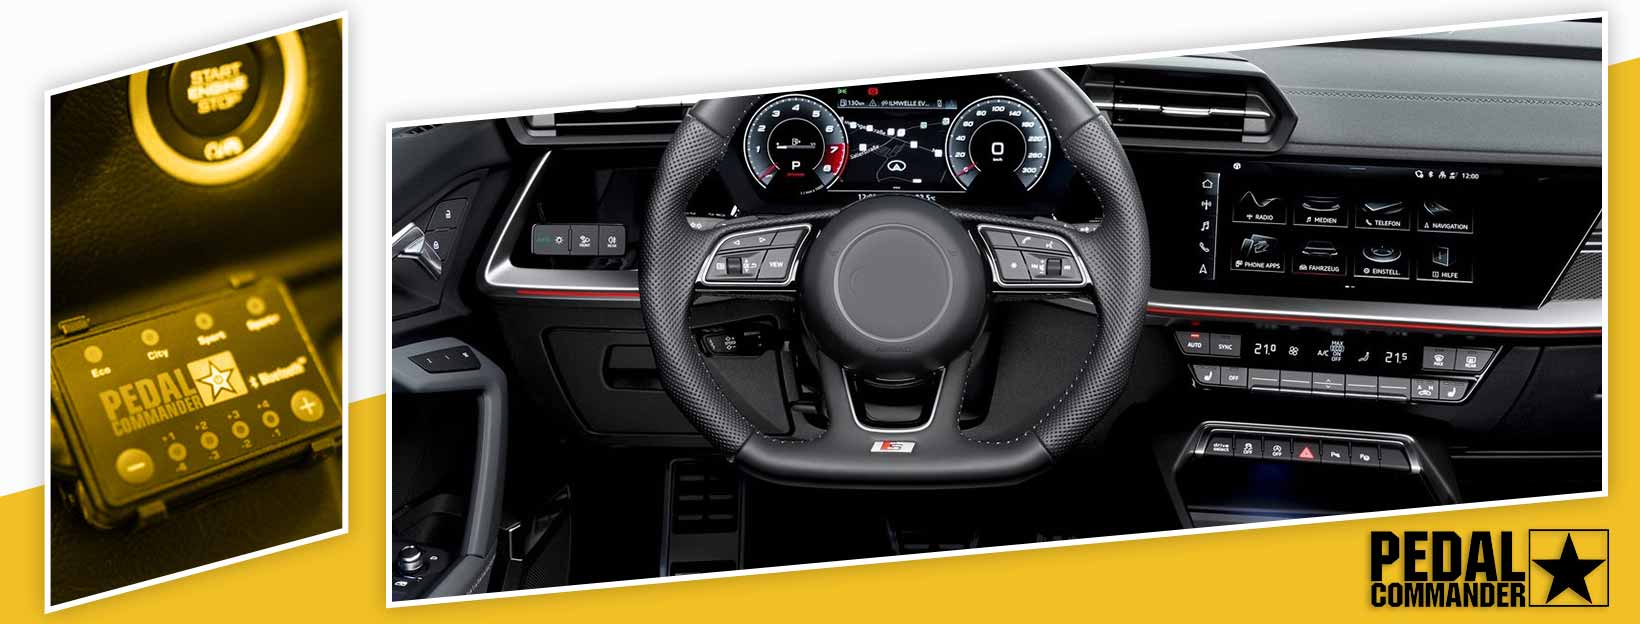 Pedal Commander for Audi S3 - interior